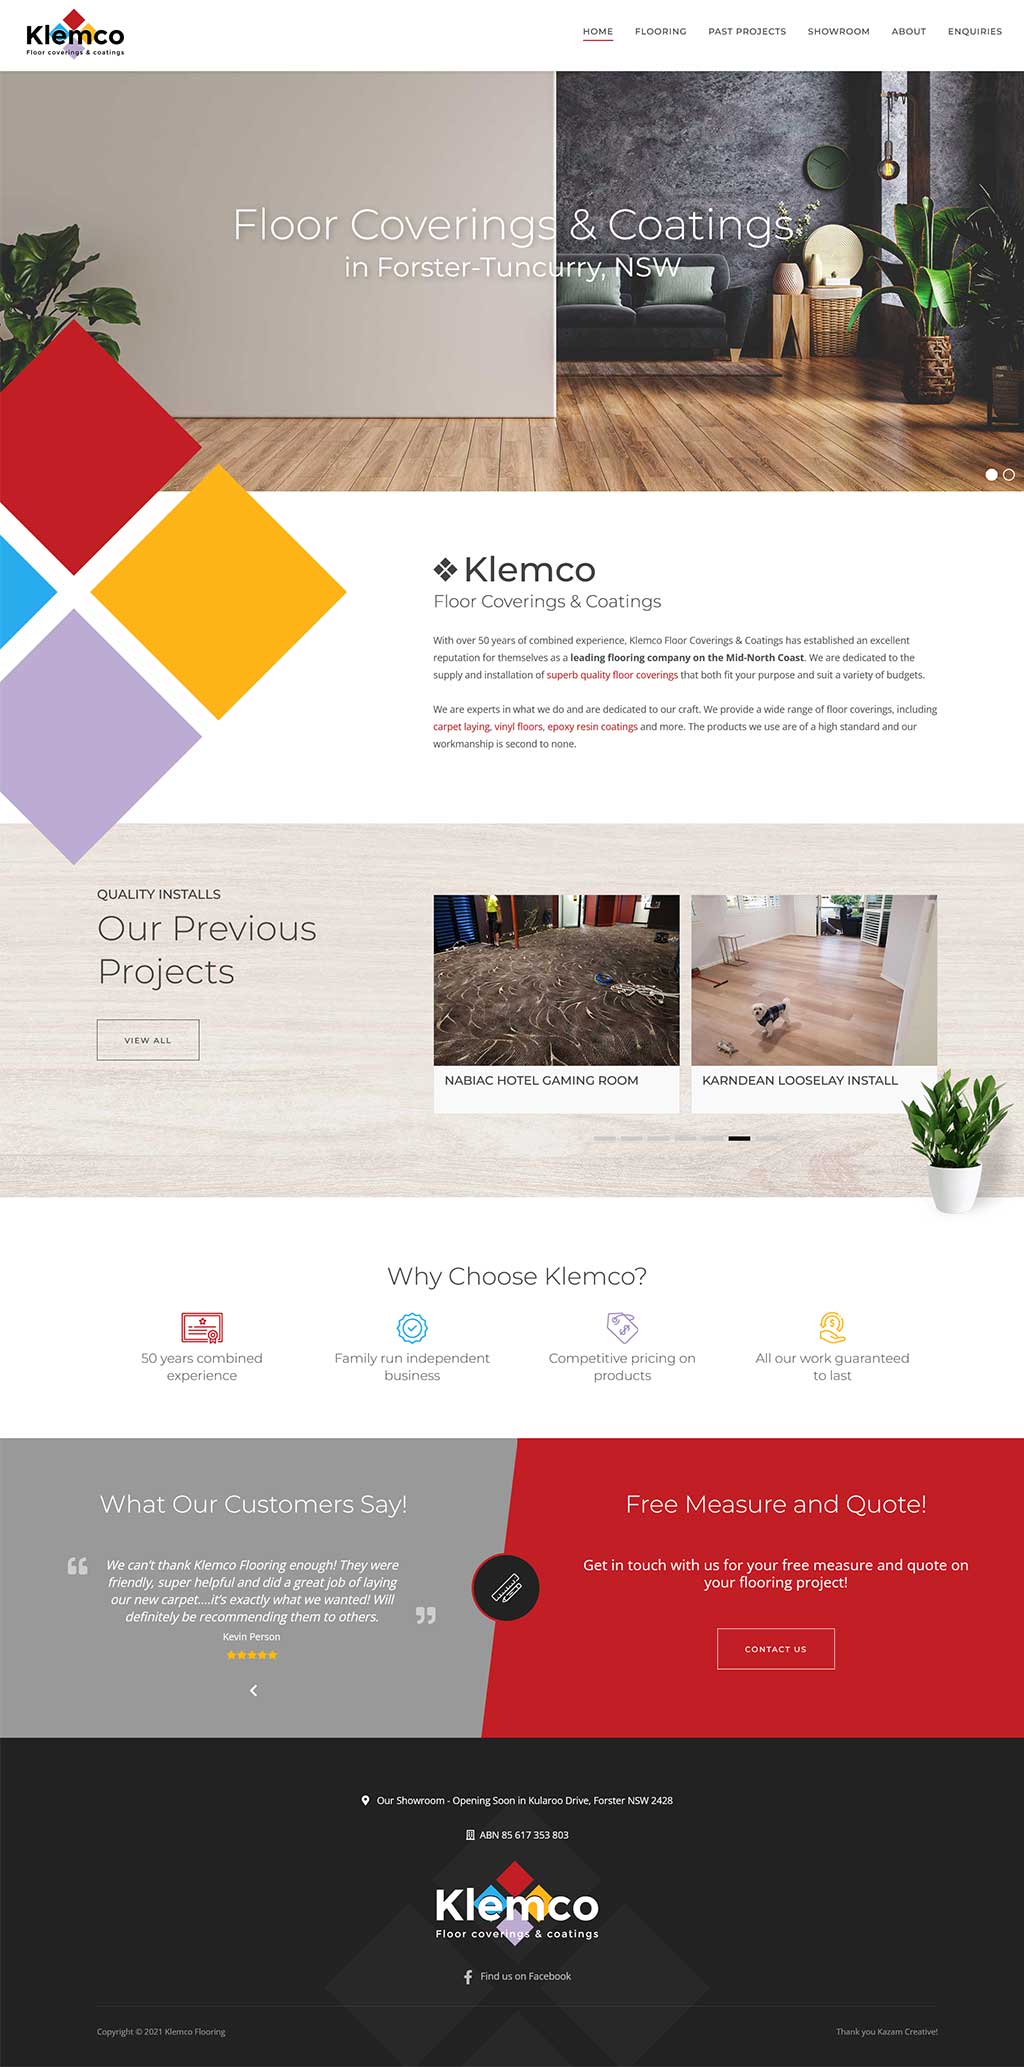 Website Design Client - Klemco Floor Coverings and Coatings